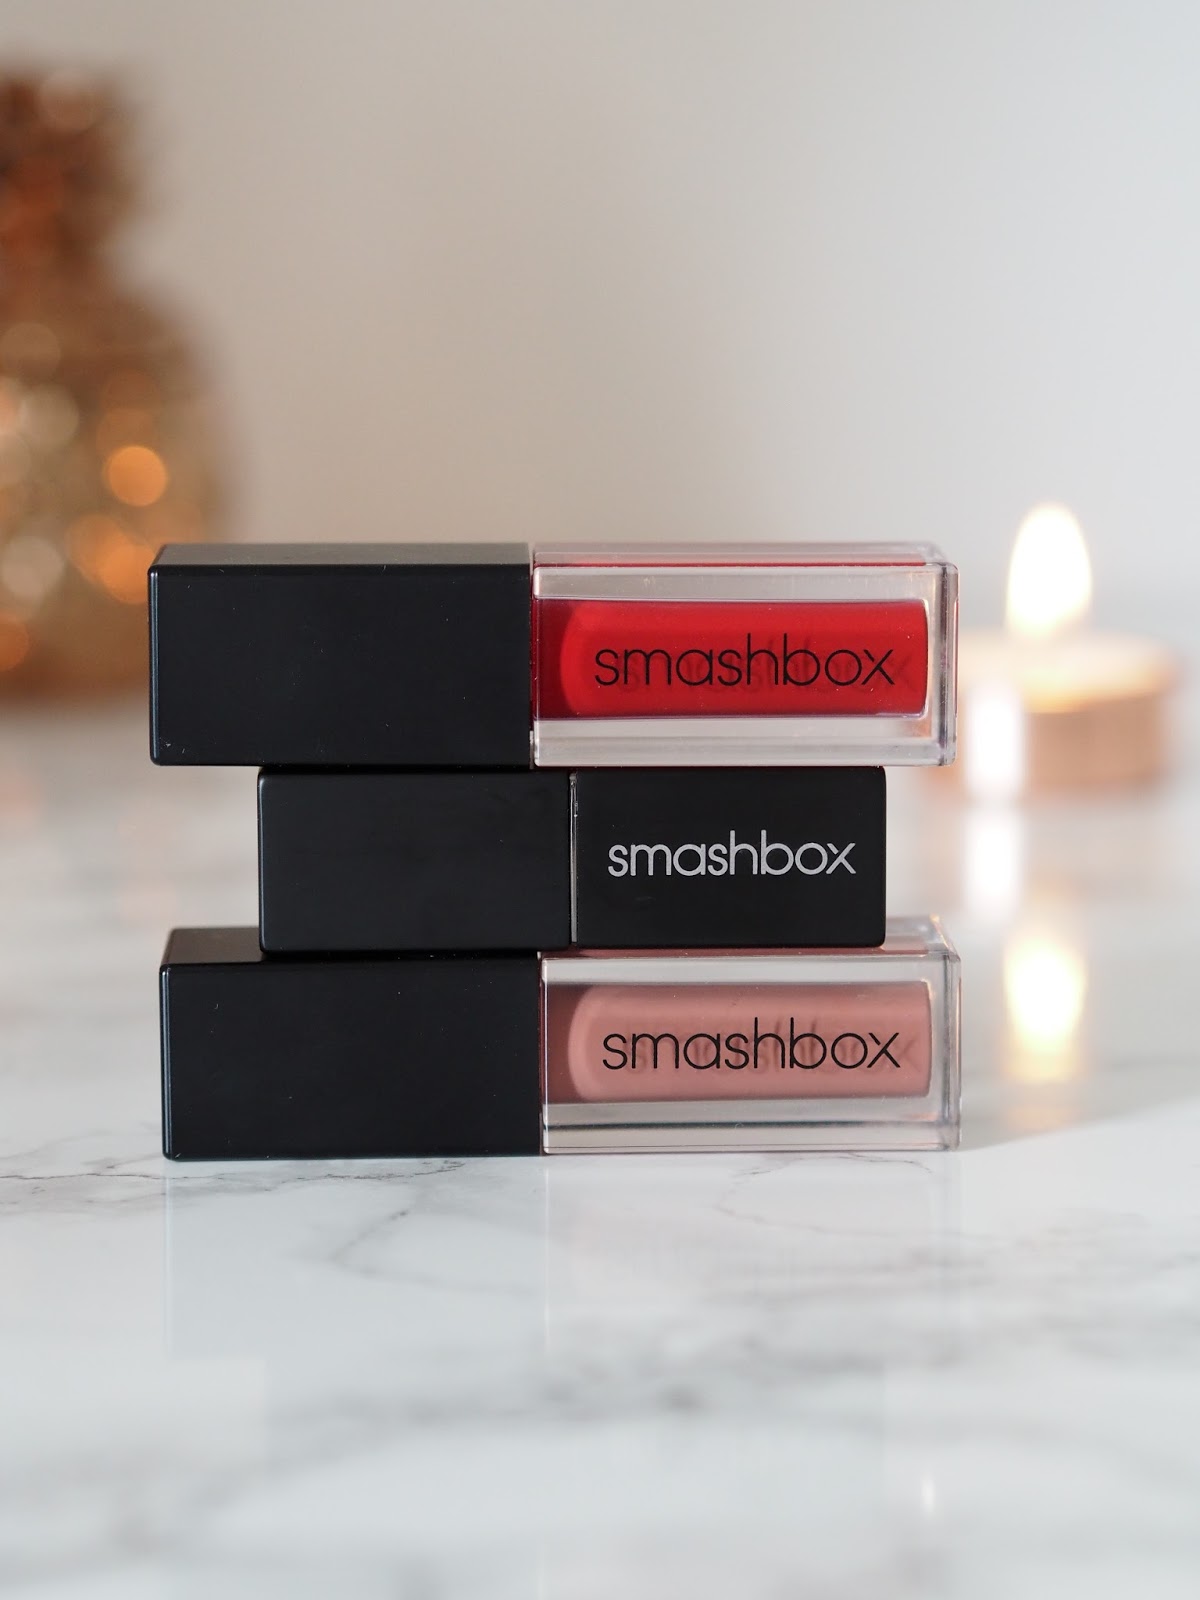 Smashbox lipstick makeup Priceless Life of Mine Over 40 lifestyle blog